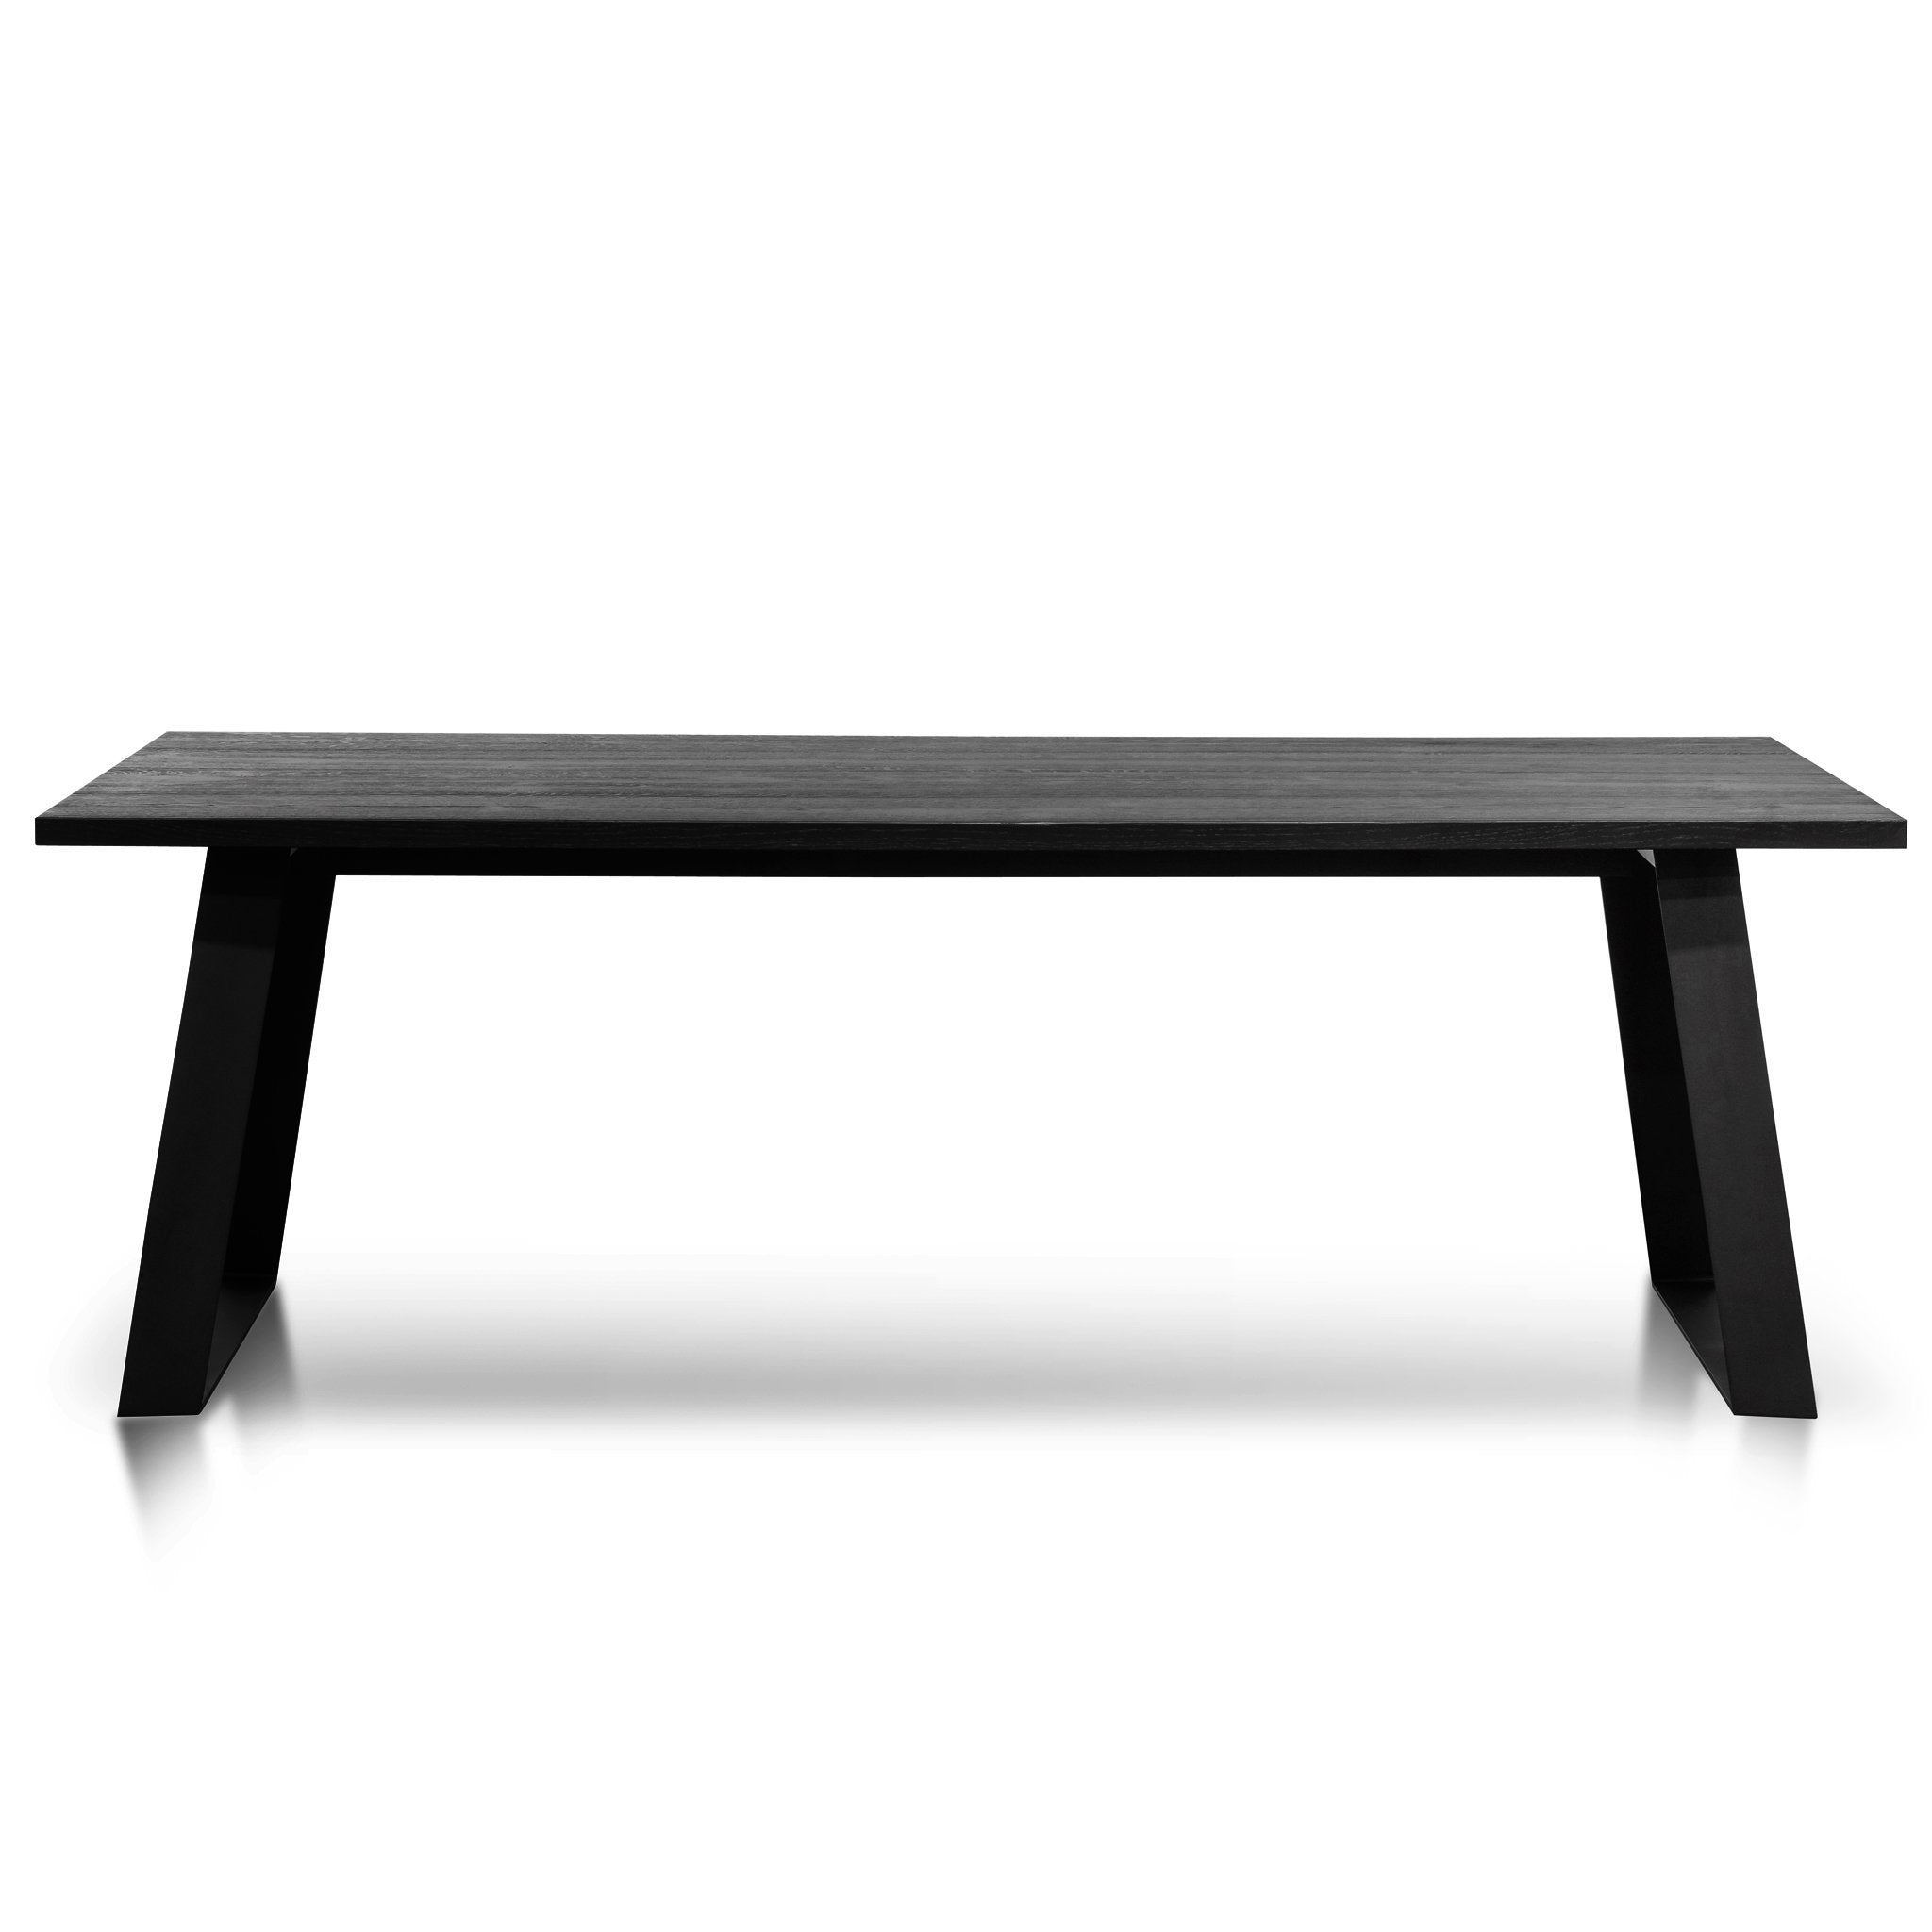 Nile 2.2m Straight Top Dining table - Black Rustic Oak - Metal Legs - Dining Tables